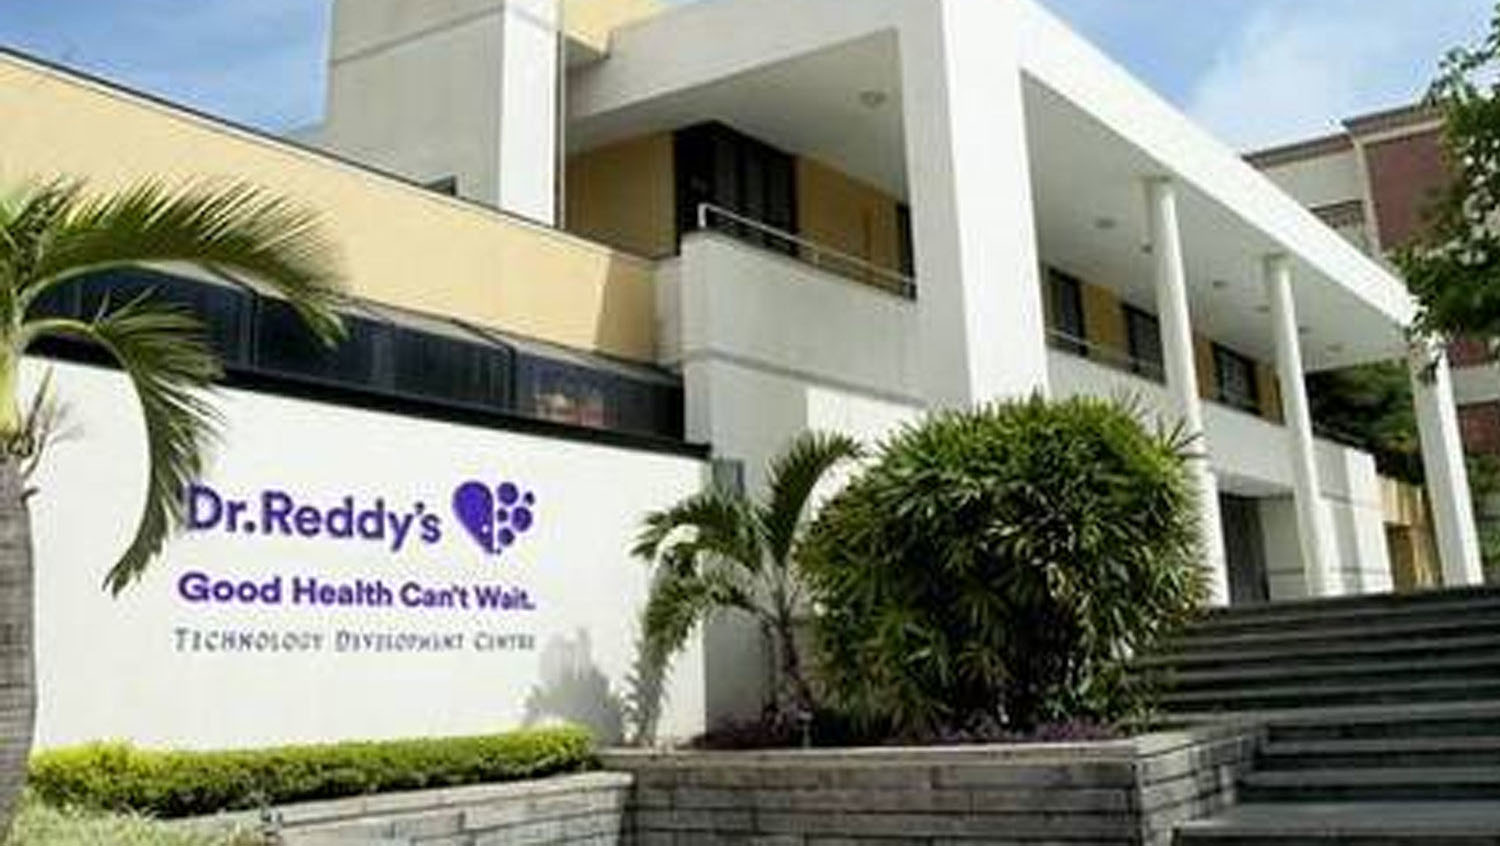 Dr.Reddy's Laboratories Ltd